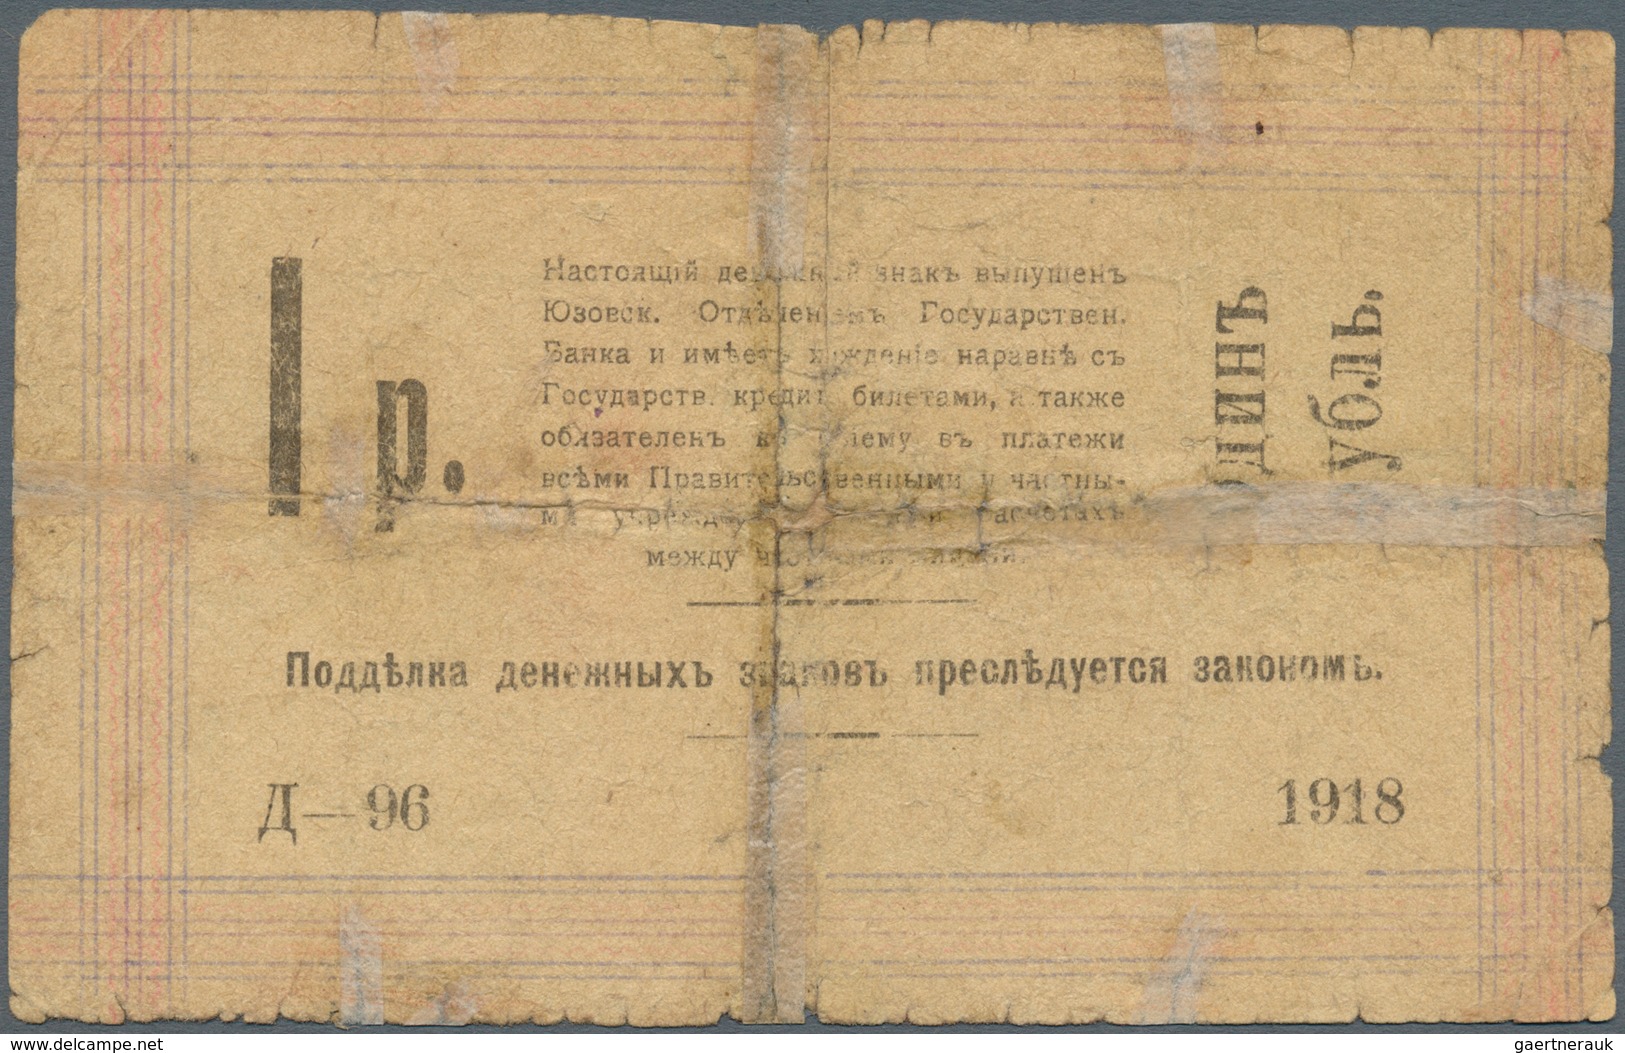 Ukraina / Ukraine: Yuzovsk Central Bank (Юзовское  Отдҍленiе  Государственнаго  Банка), 1 Ruble 1918 - Ucrania